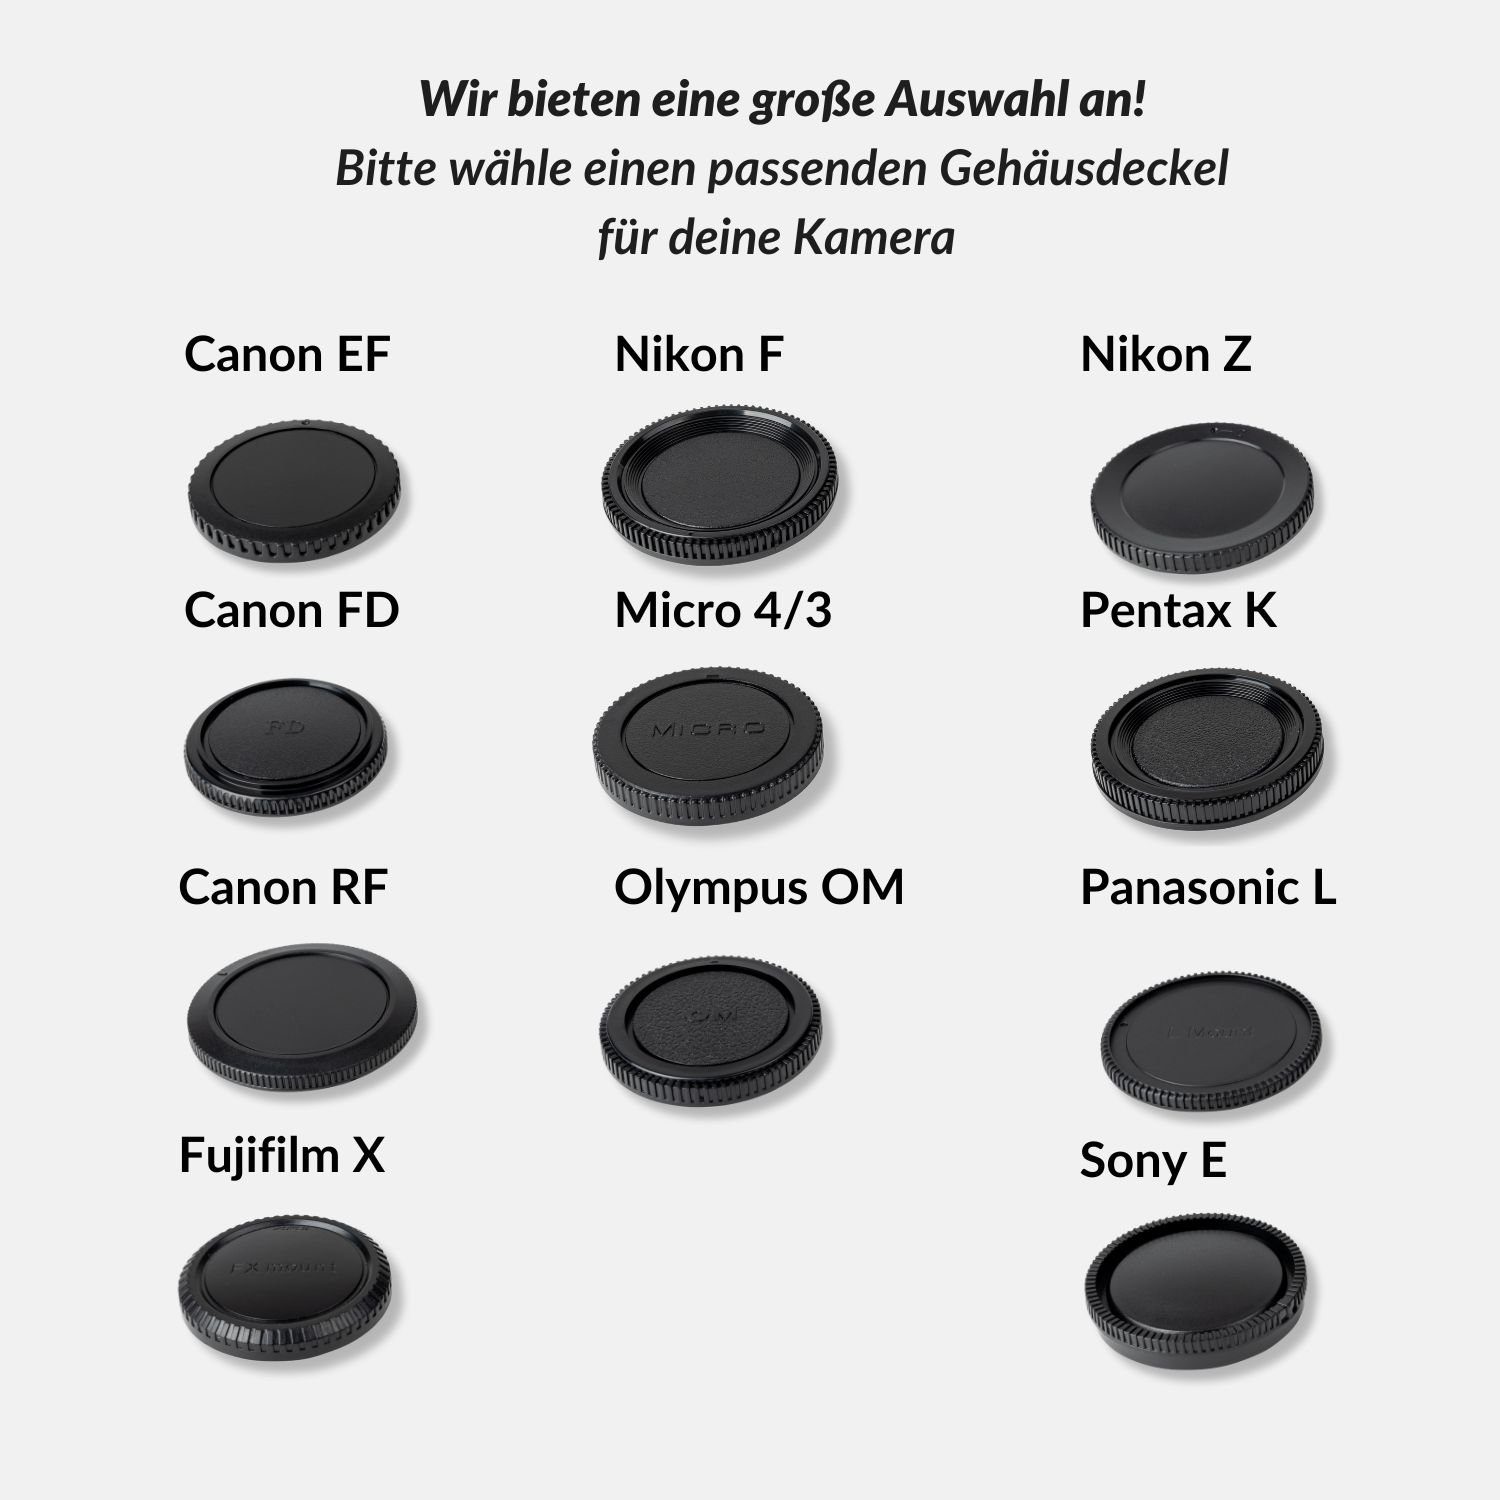 Lens-Aid DSLR, Cap, Gehäusedeckel für E-Bajonett, Systemkamera Sony Body